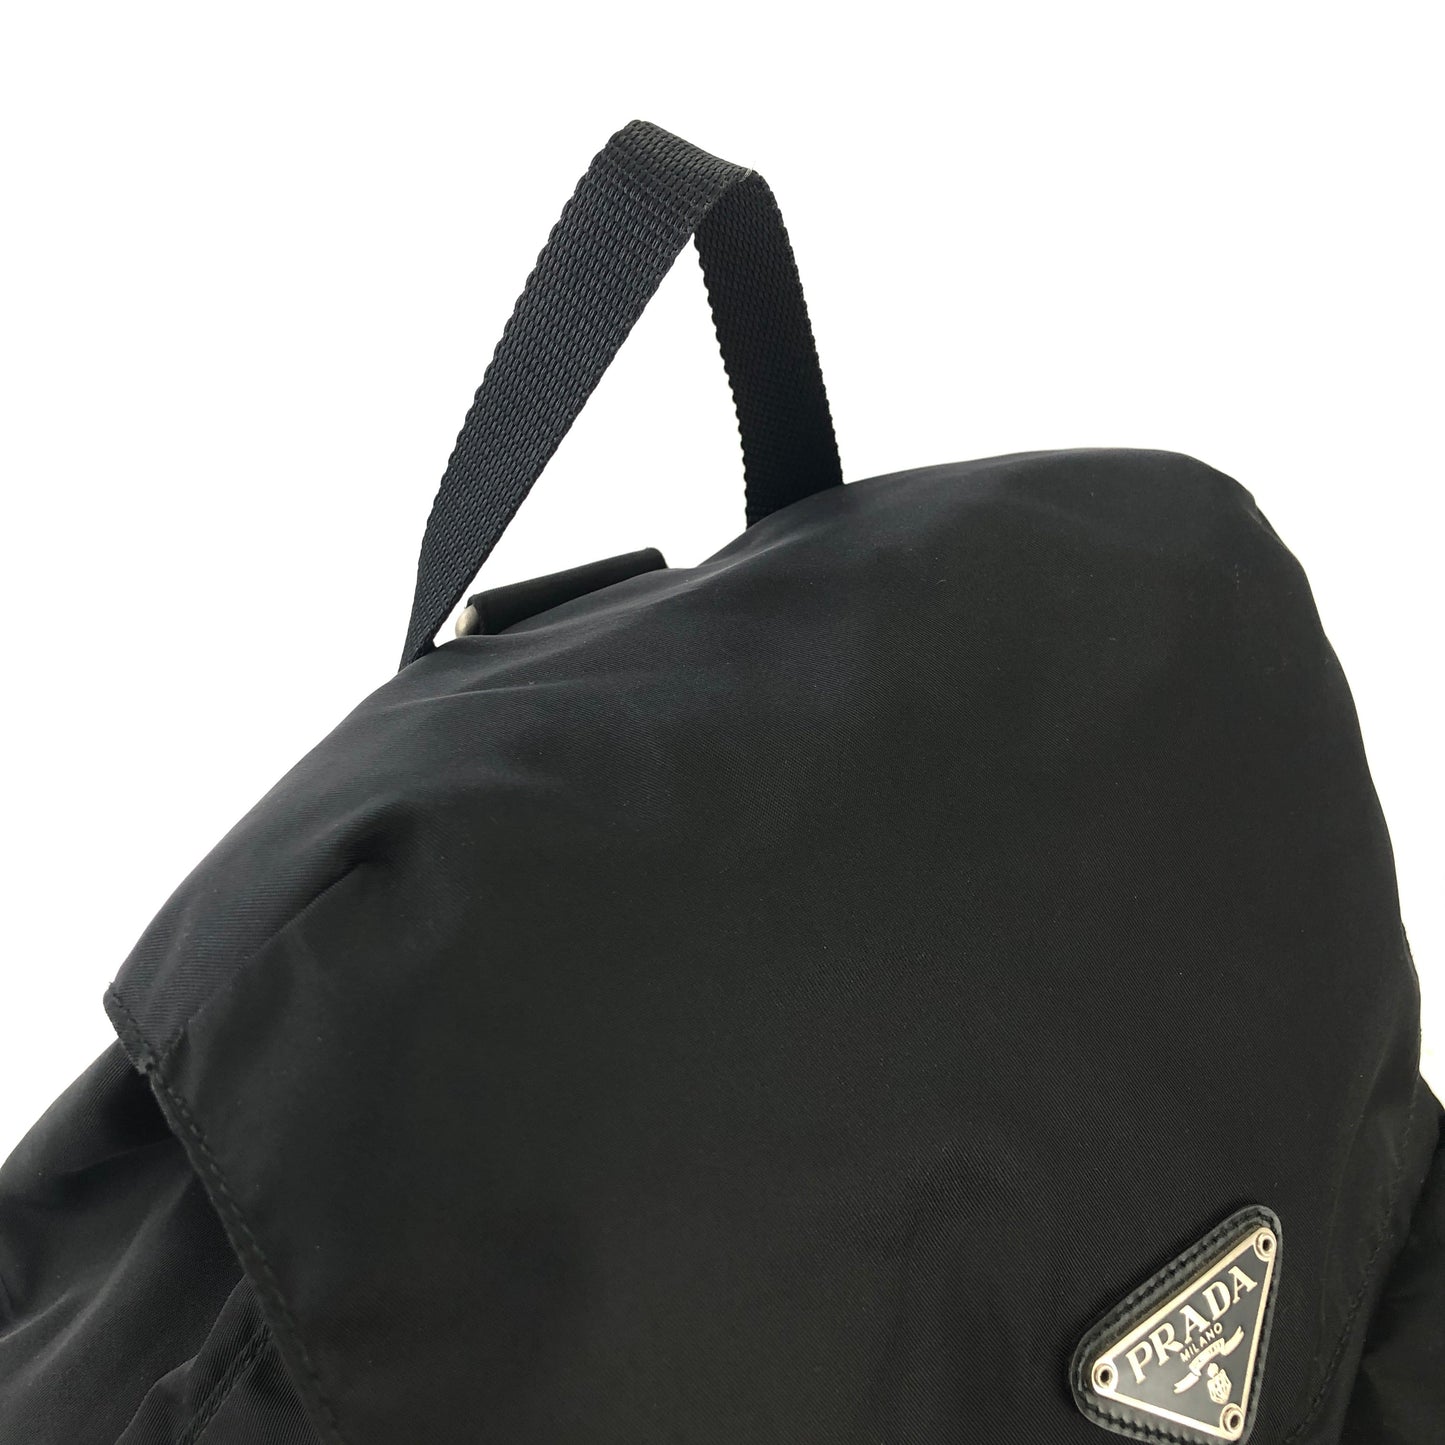 PRADA Triangle logo Double pocket Nylon Backpack Black Vintage xakey2